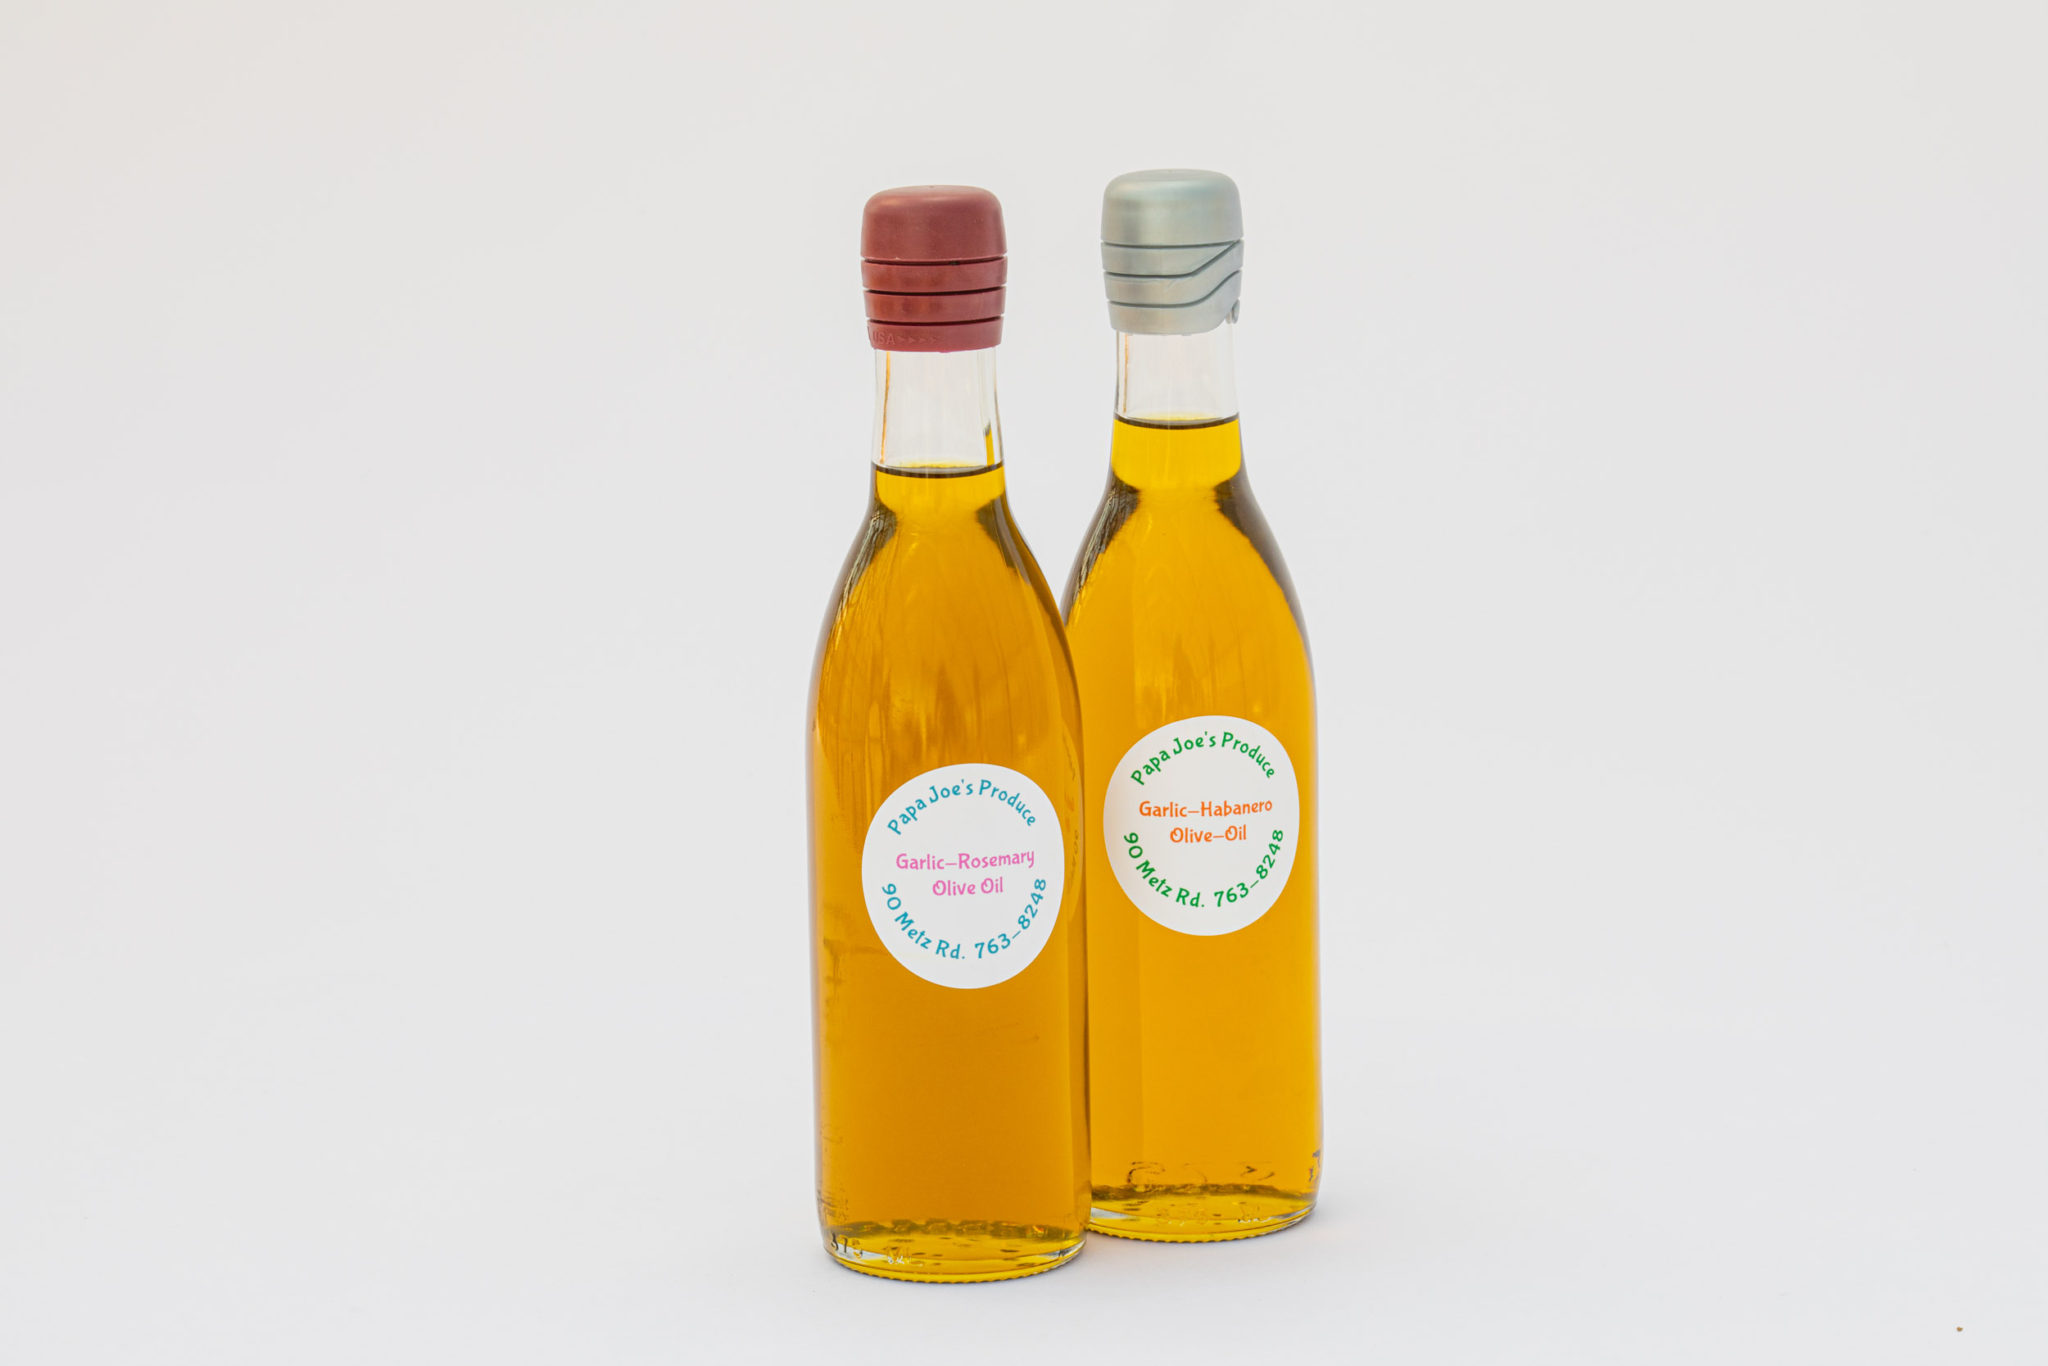 Infused olive oils - rosemary garlic and garlic habanero